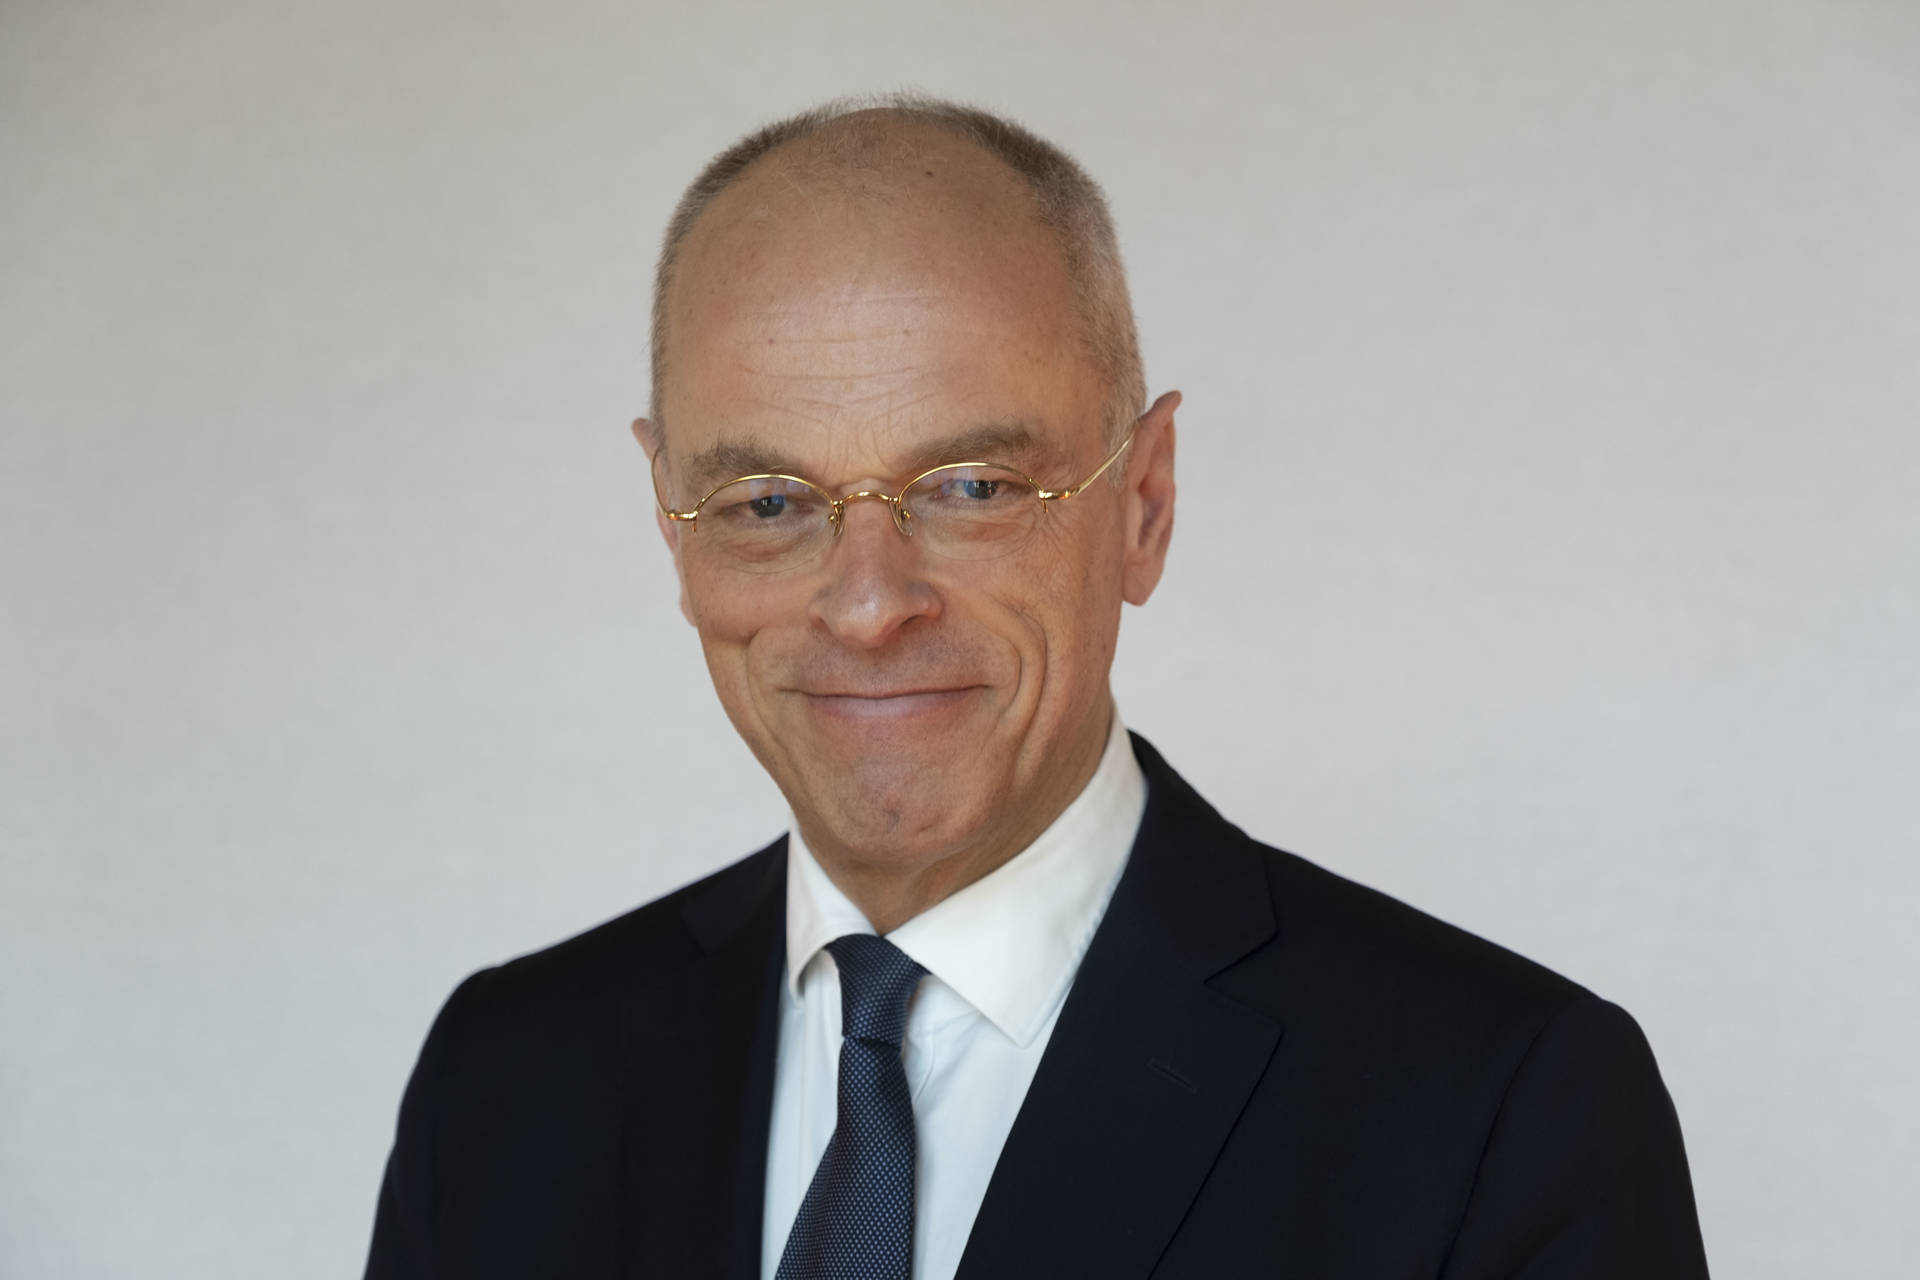 prof. dr. J.A. Bruijn (VVD)